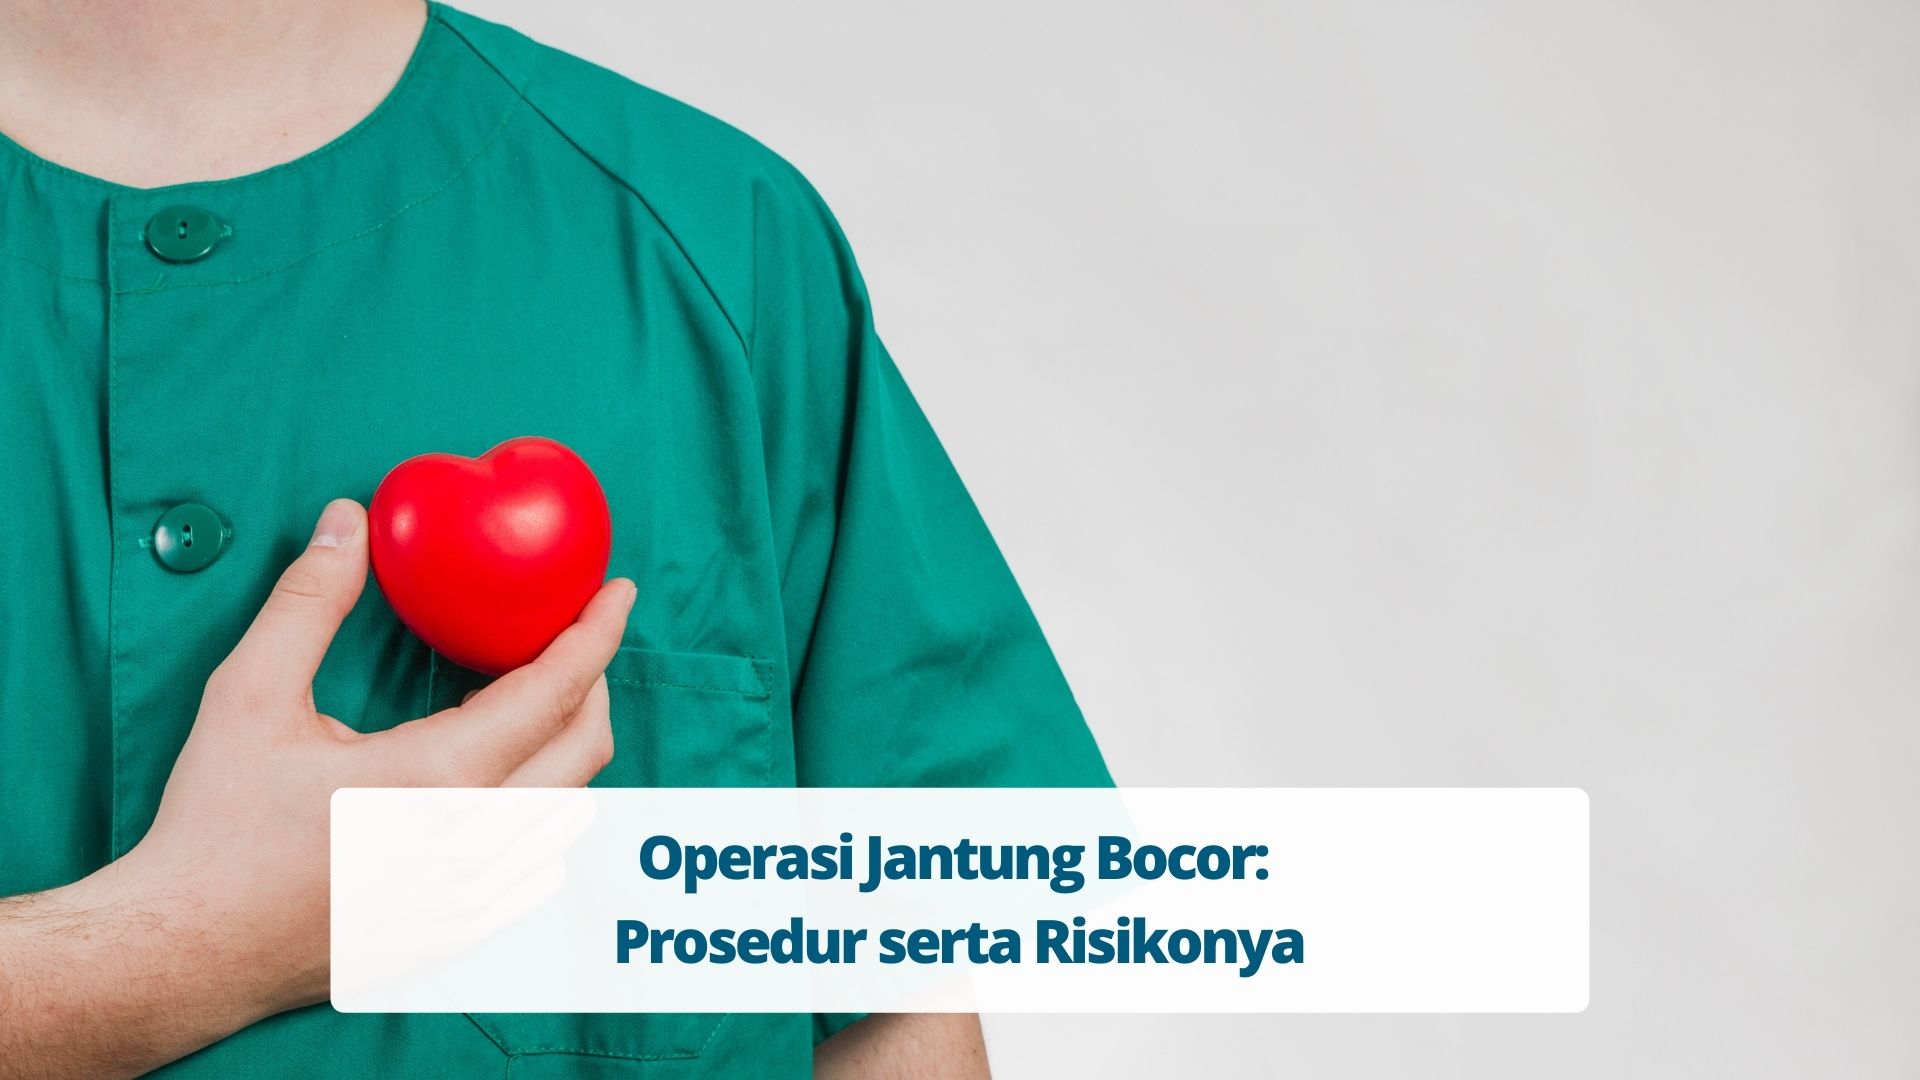 Operasi Jantung Bocor Prosedur serta Risikonya